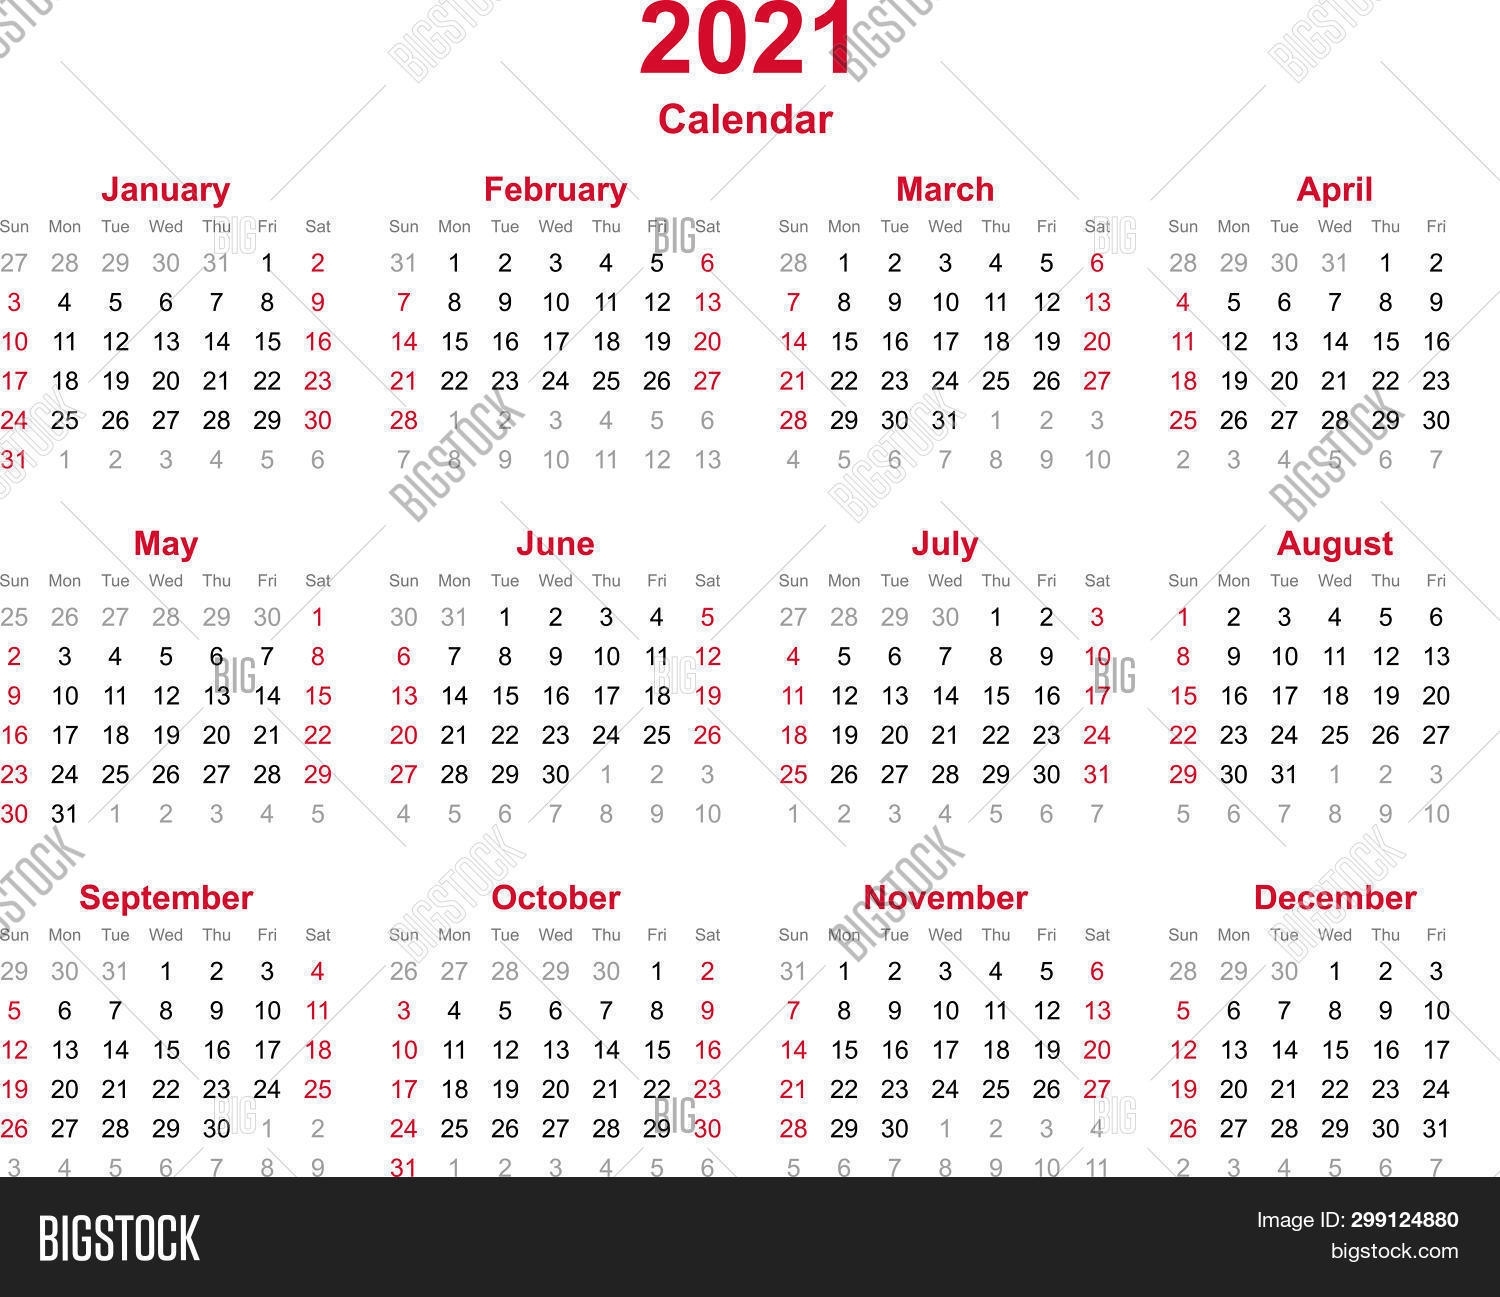 4-5-4 Retail Calendar 2021 | Printable Calendar 2020-2021